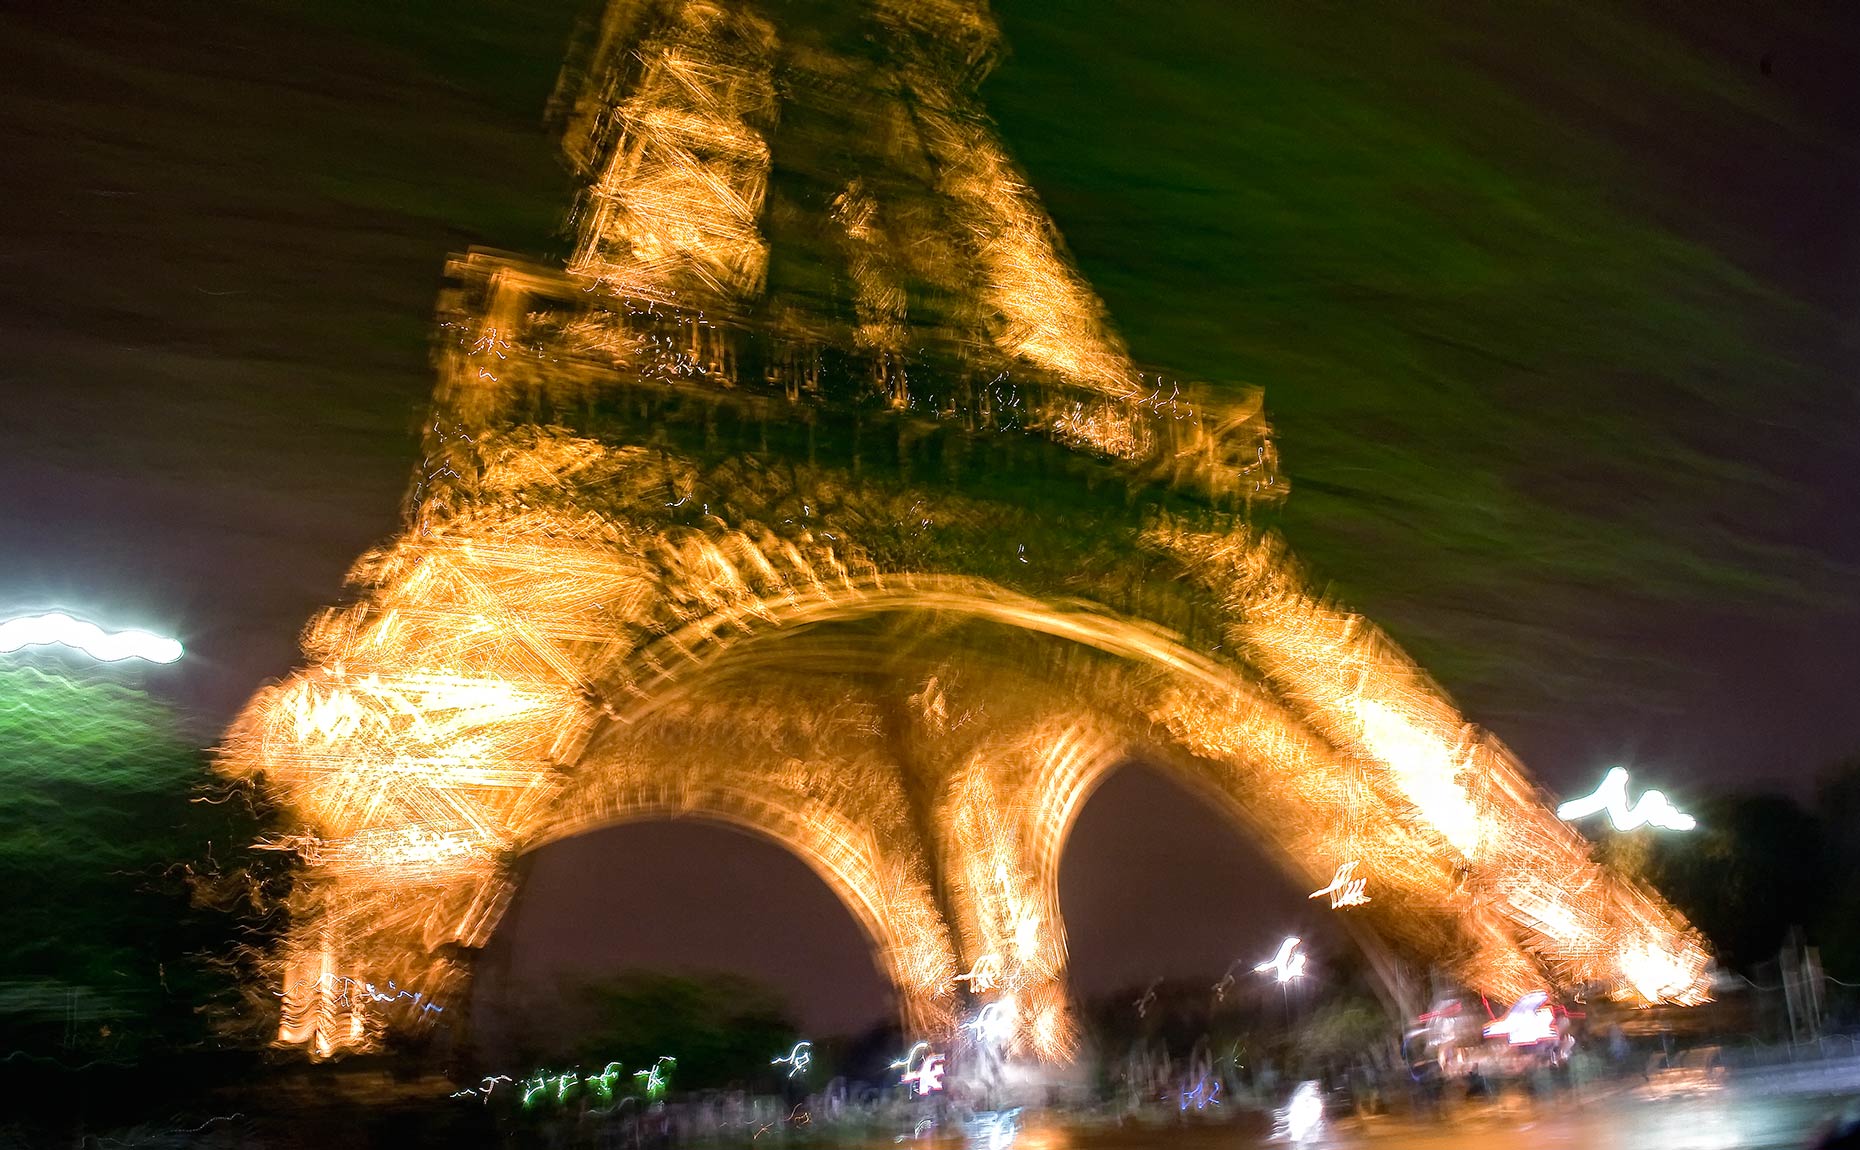 Cities at Night - Paris